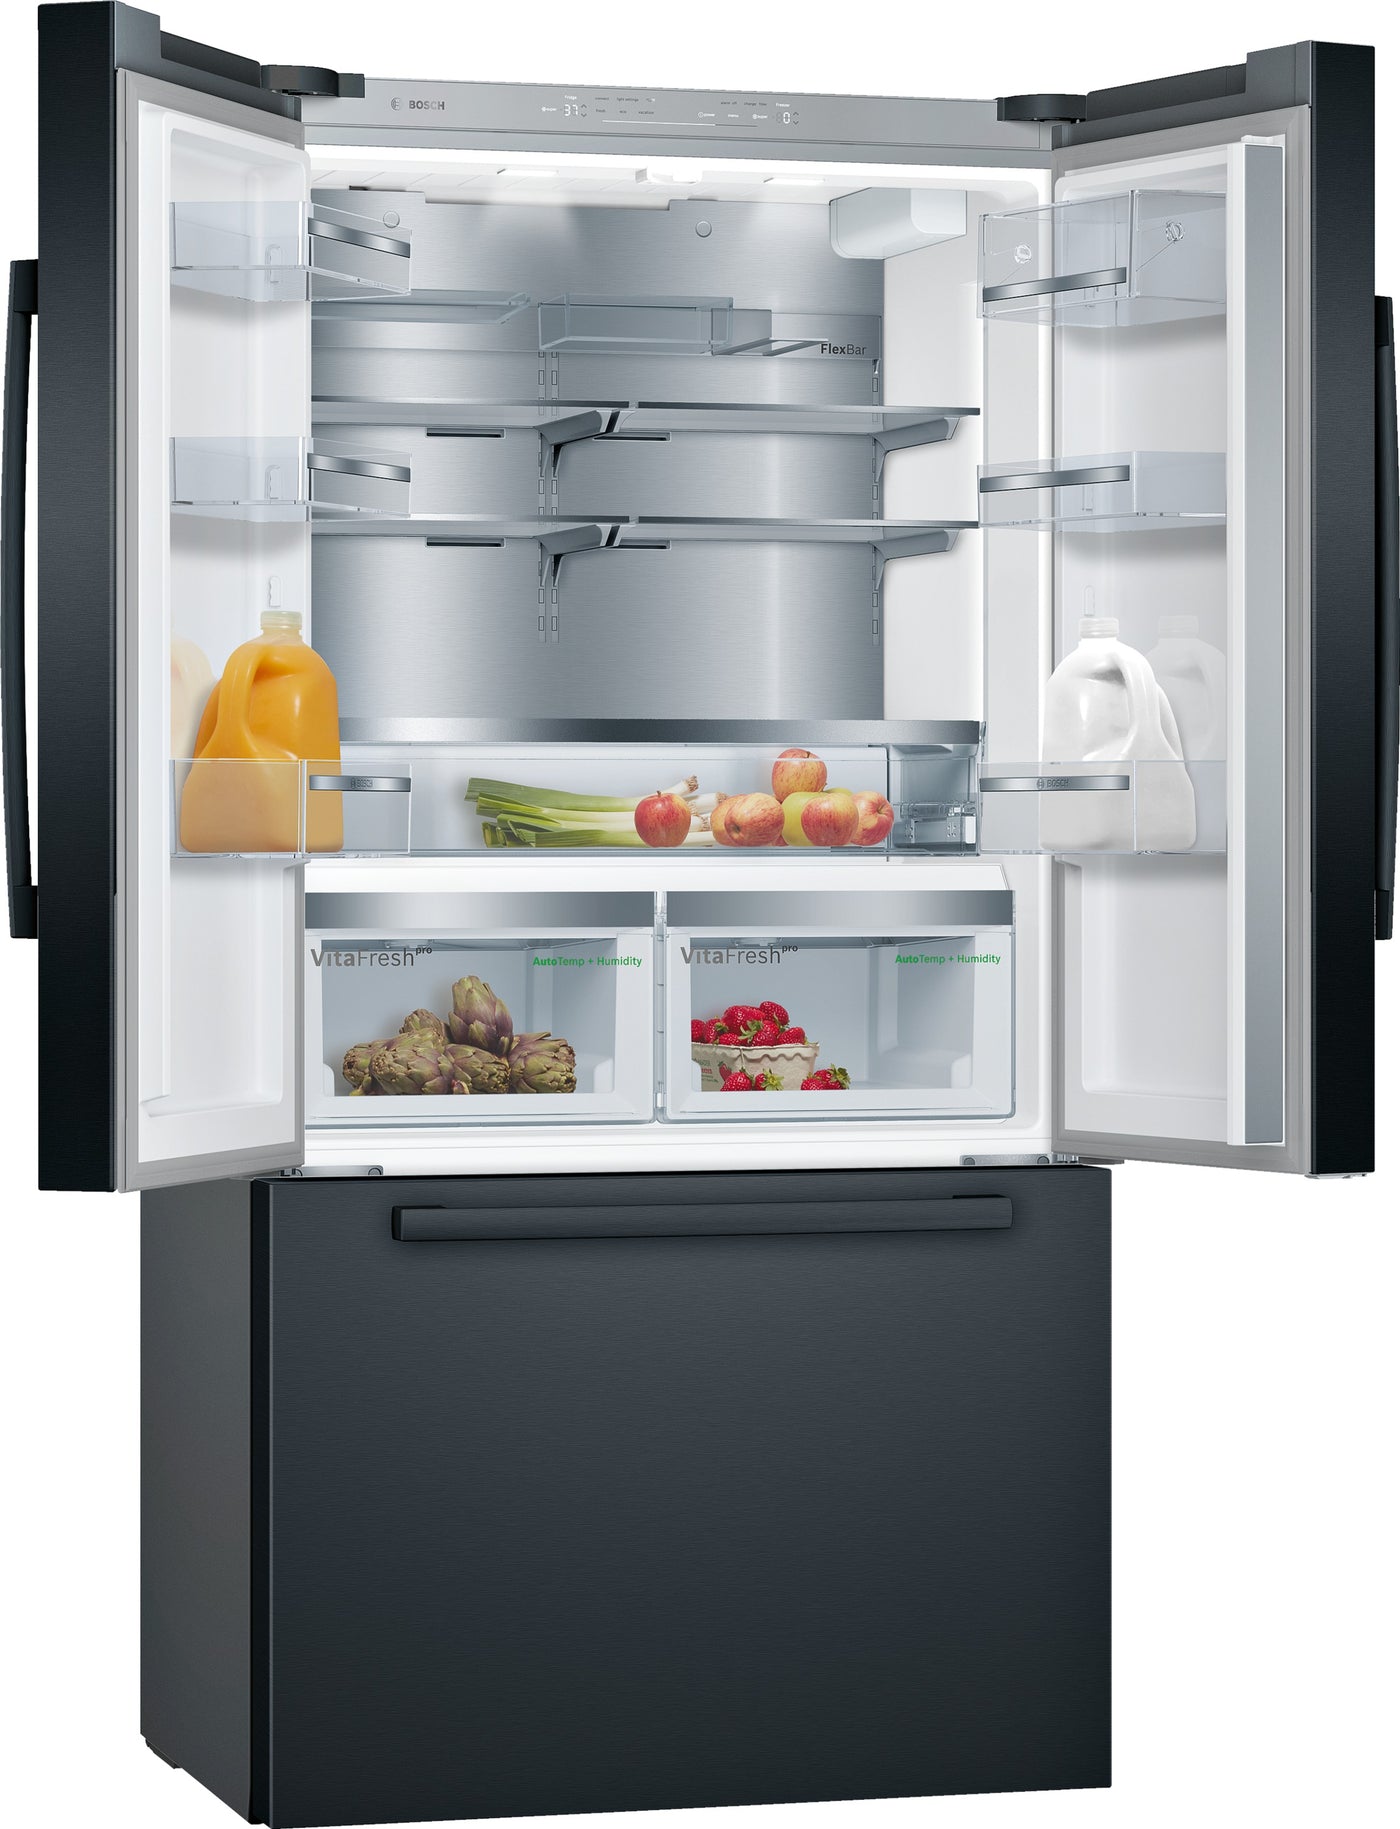 Bosch 800 Series Black Stainless Steel Counter-Depth French Door Refrigerator - B36CT80SNB